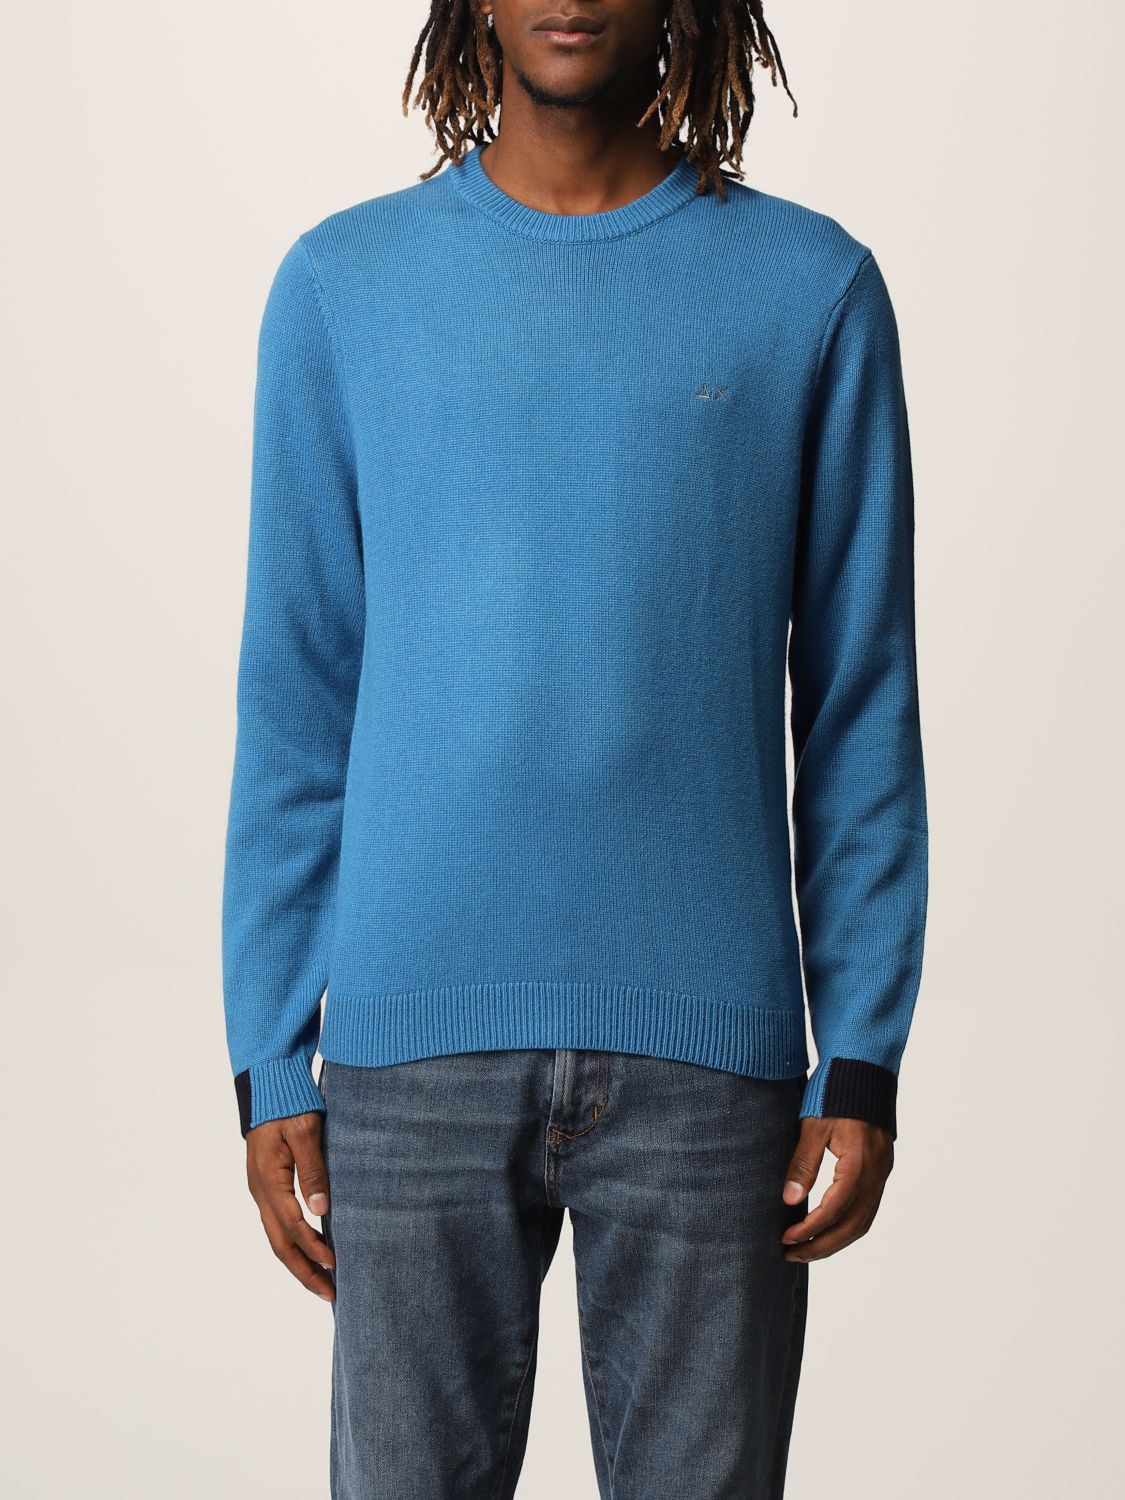 Sun 68 Outlet: sweater for man - Royal Blue | Sun 68 sweater K41134 ...